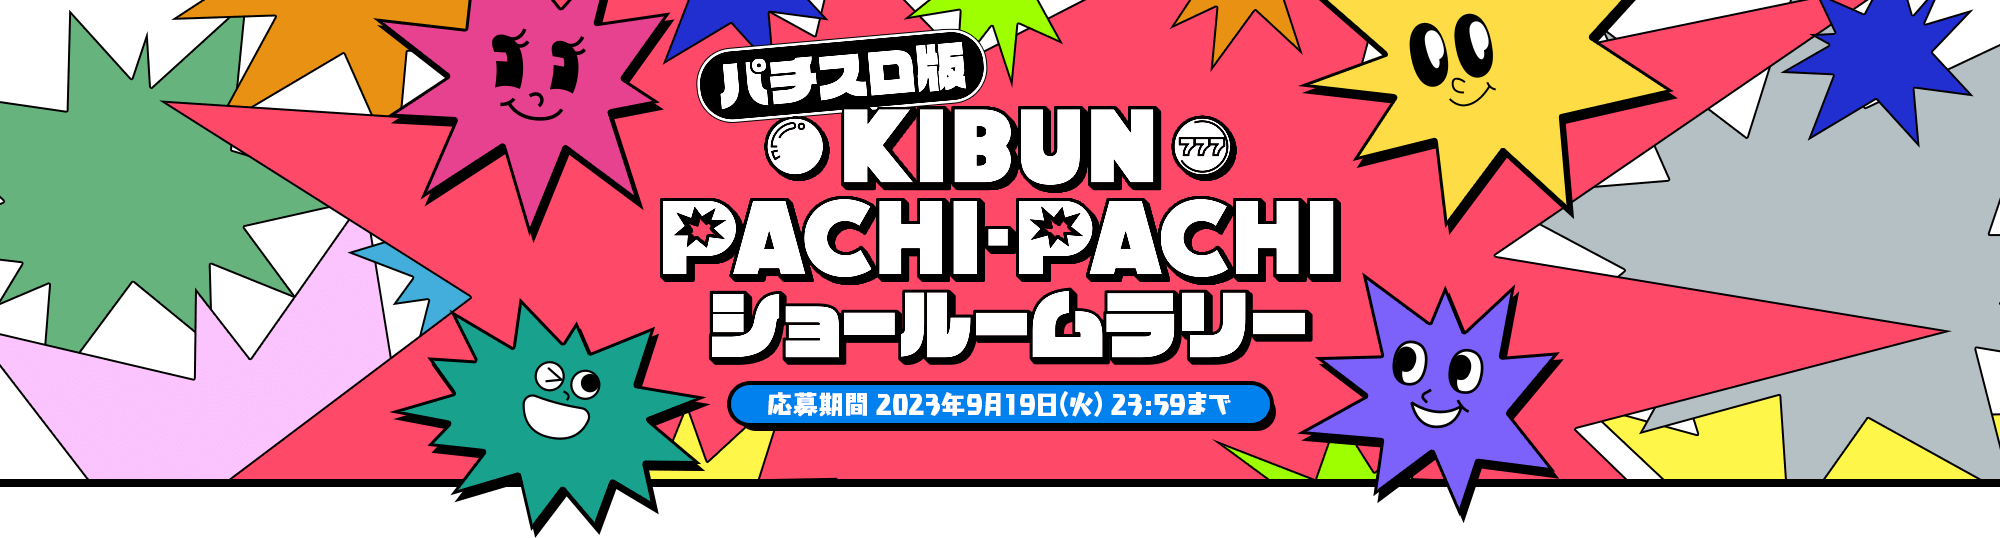 KIBUN PACHI-PACHI ショールームラリー 応募期間：定員になり次第終了